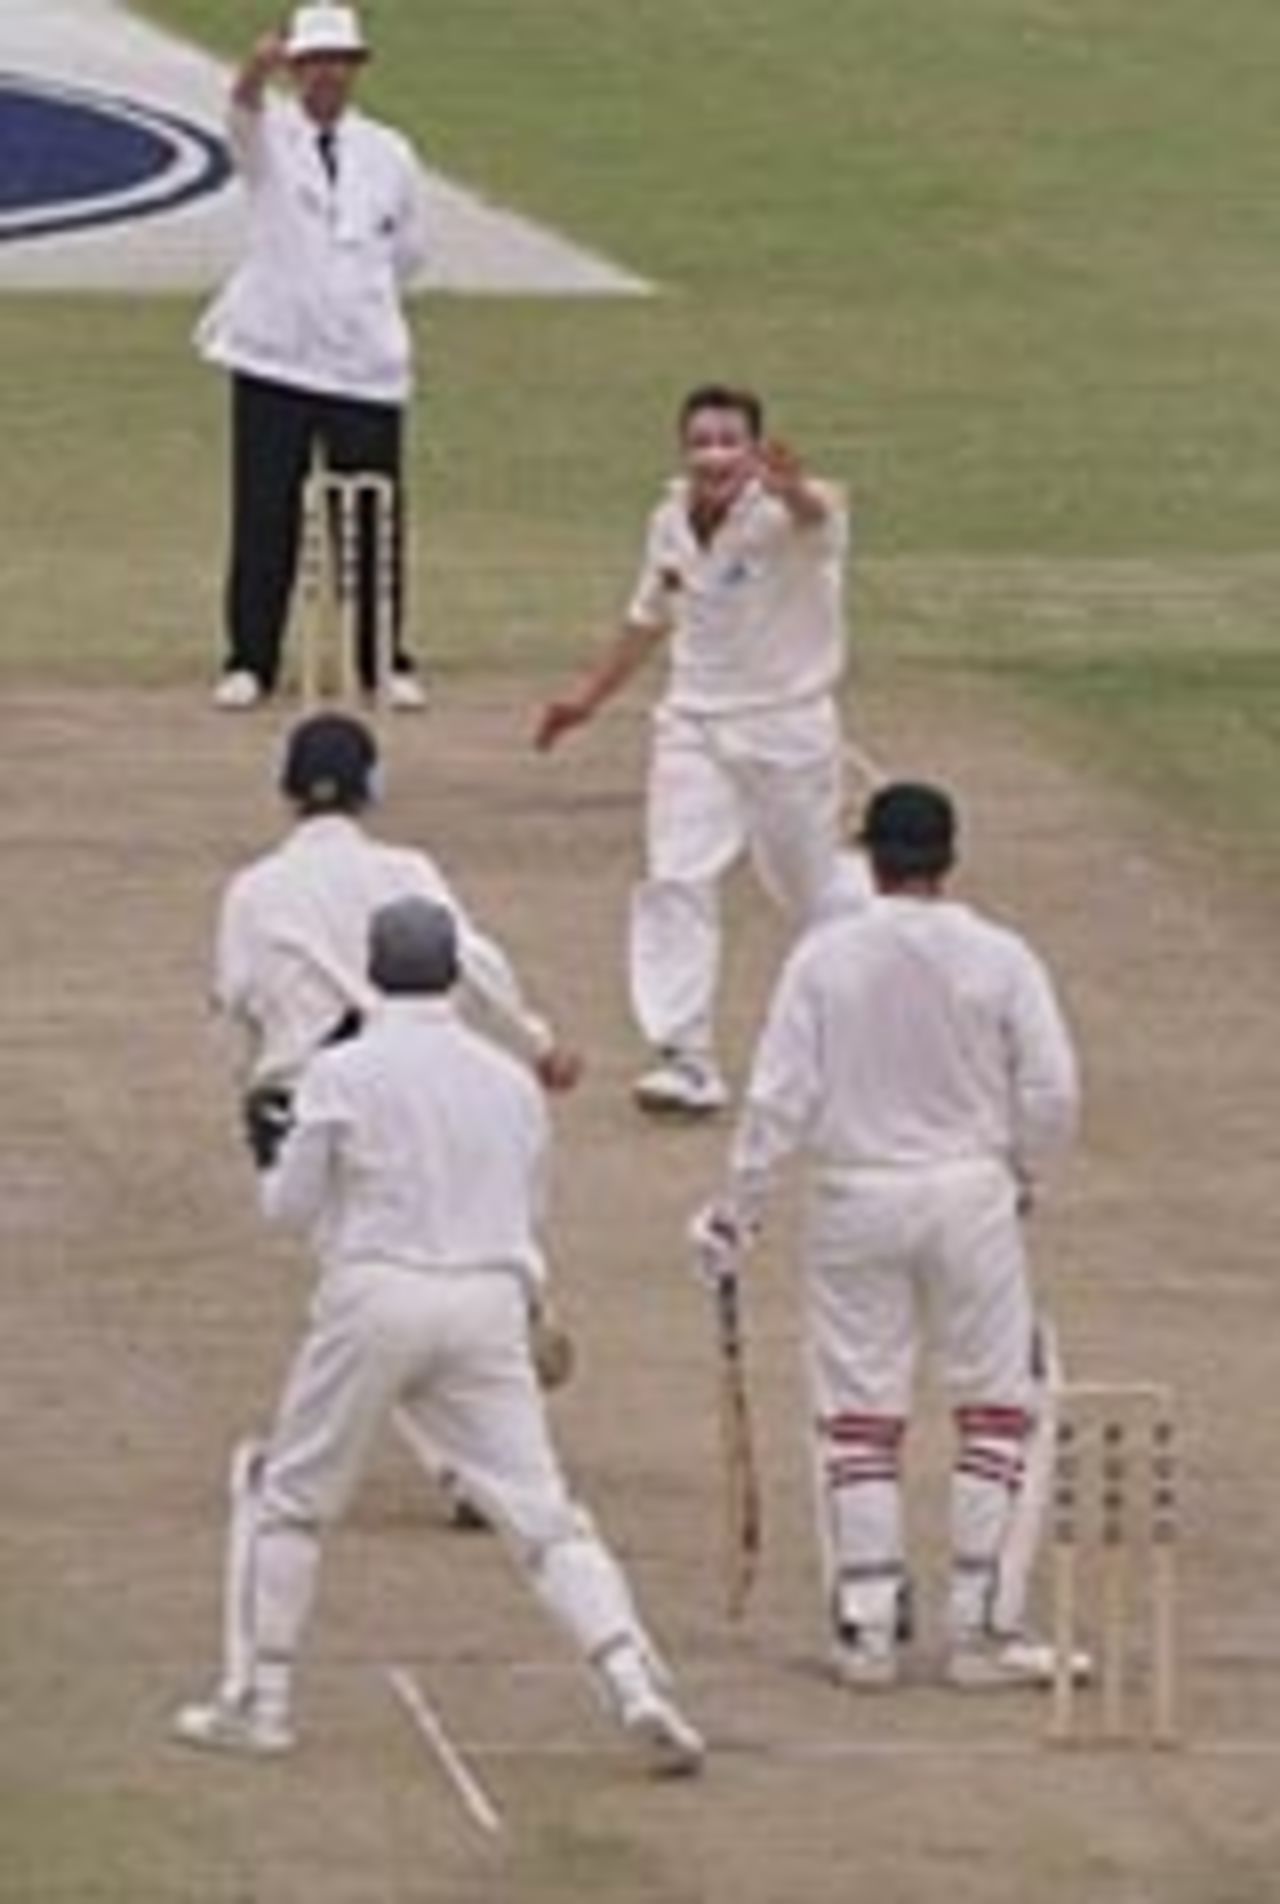 Robert Croft dismisses Andy Waller, Zimbabwe v England, 1st Test, Bulawayo, December 22, 1996